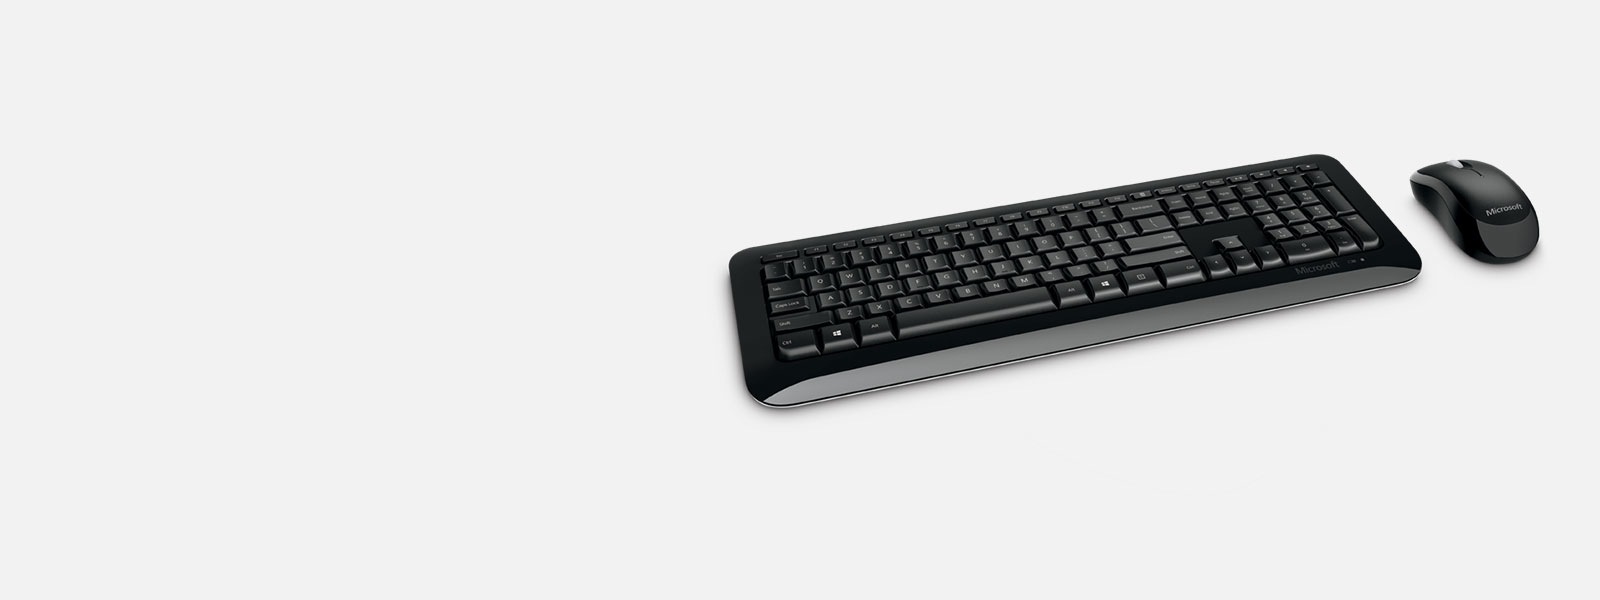 Microsoft Wireless Keyboard and Mouse Desktop 850